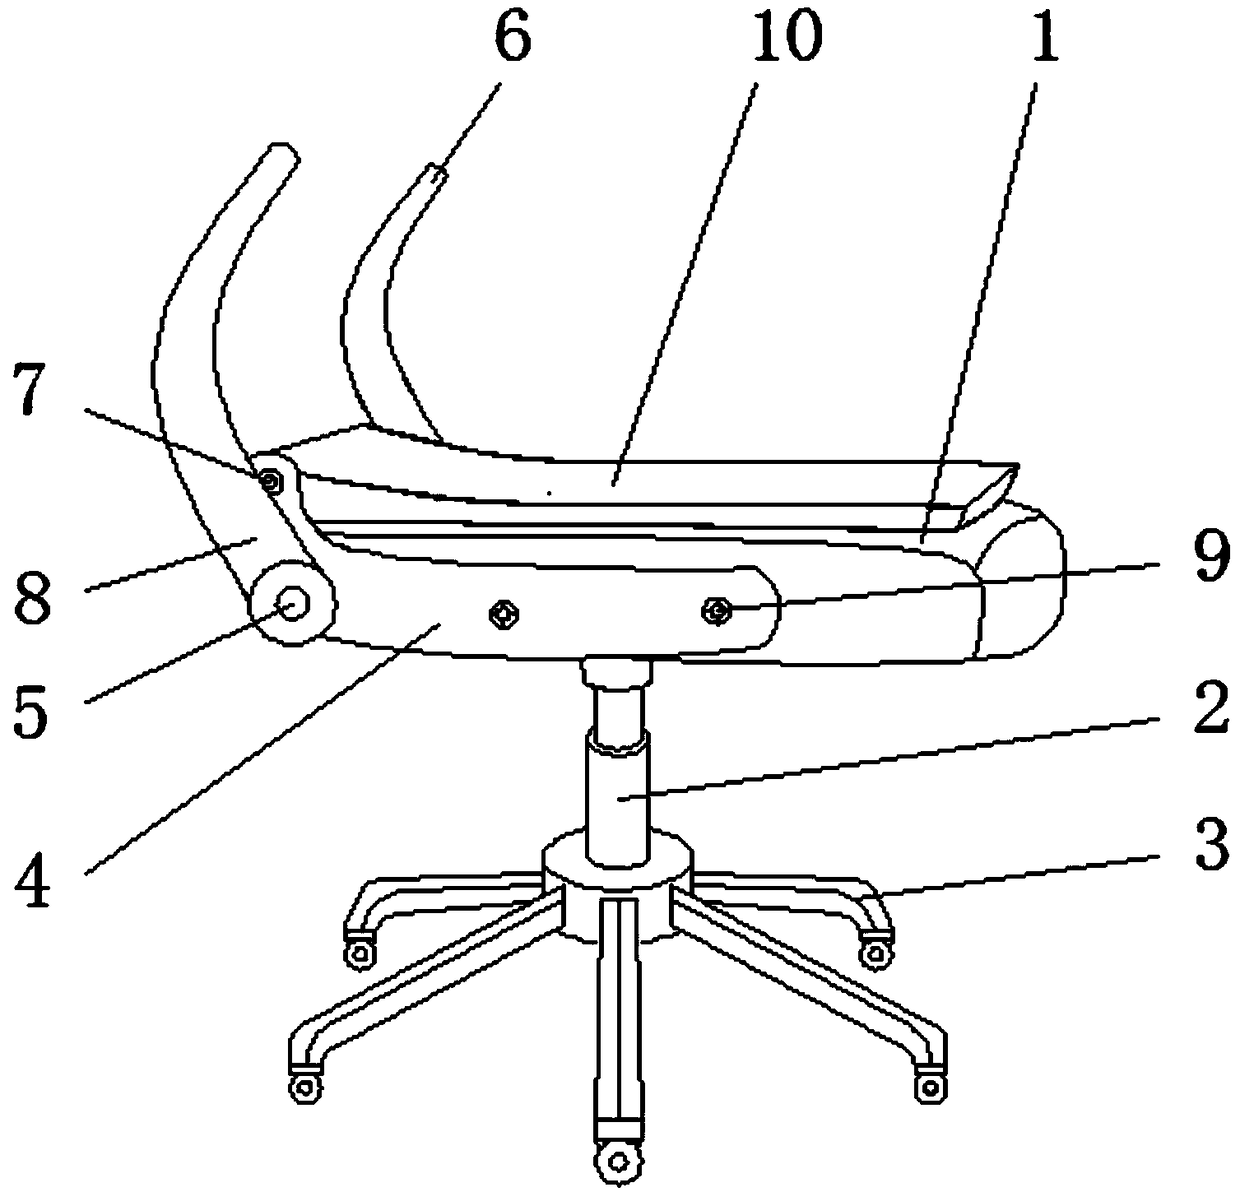 Folding rotary chair